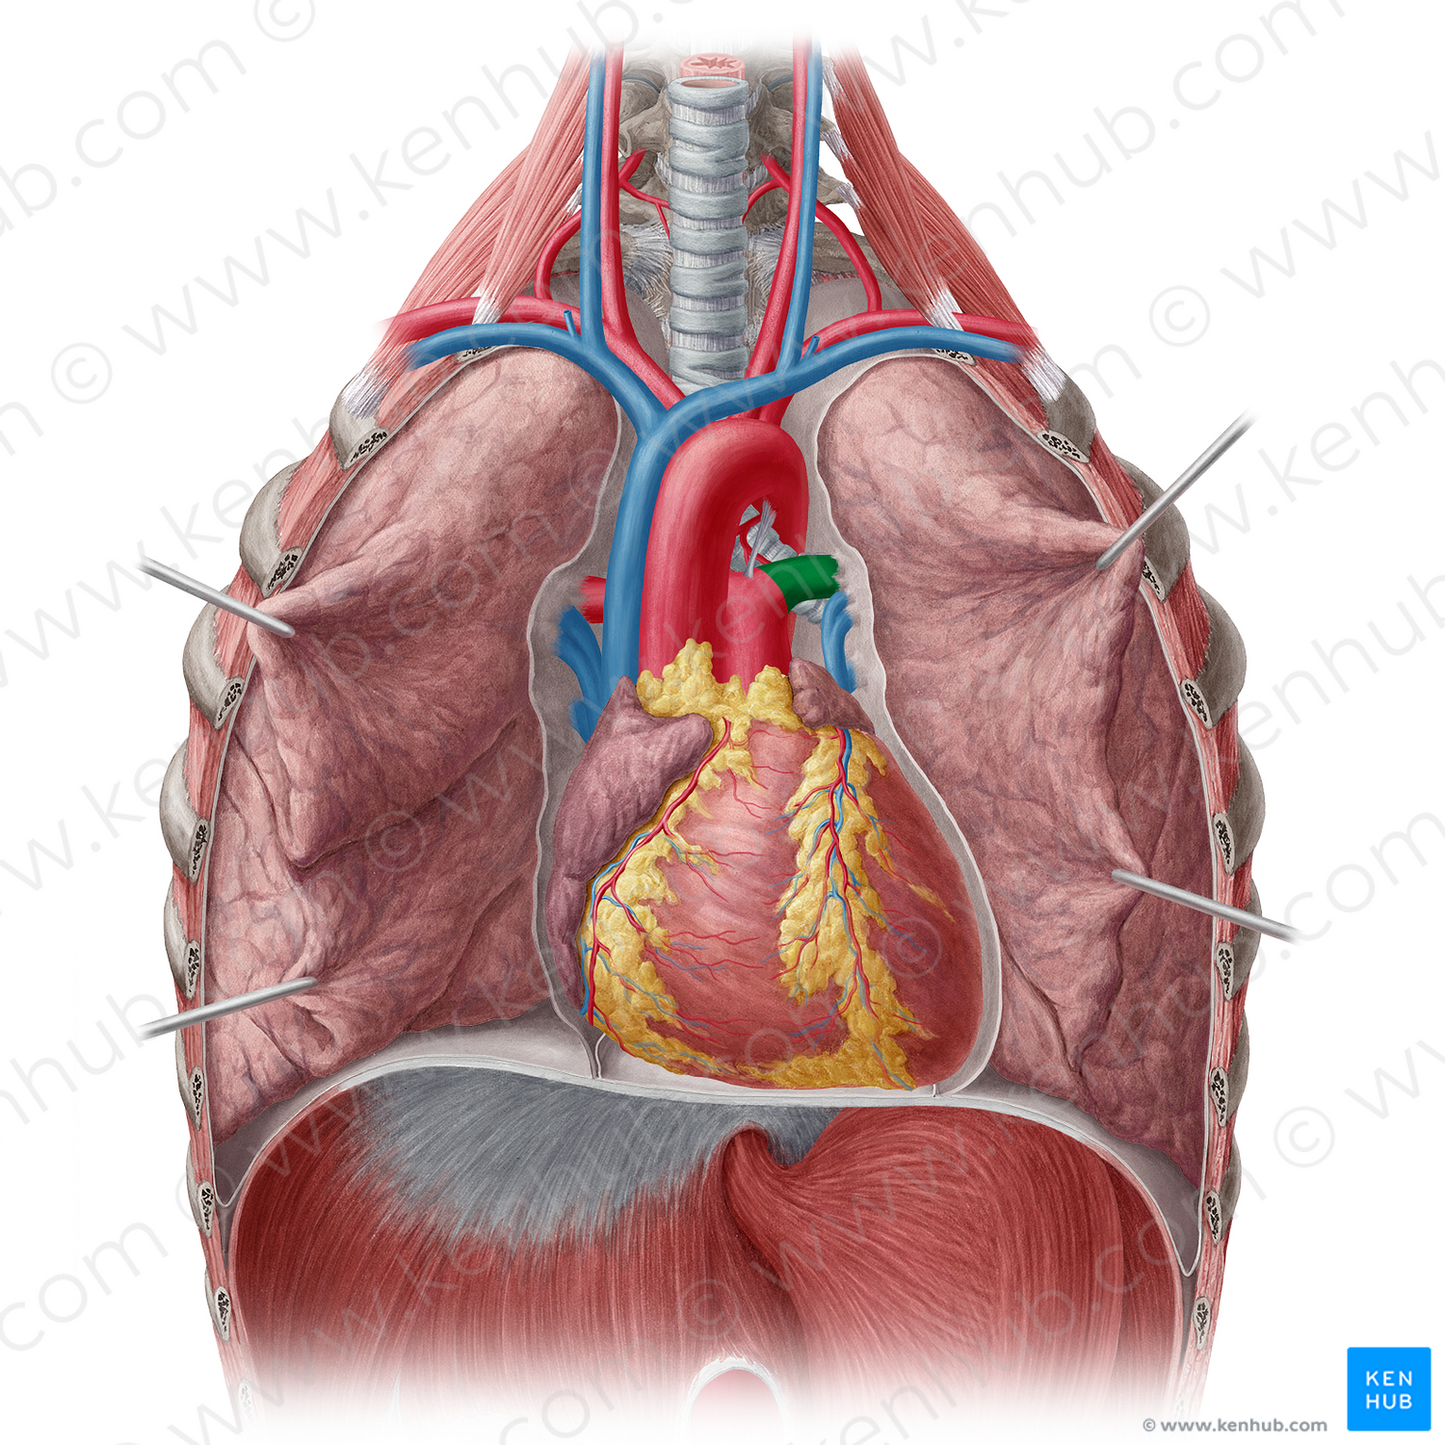 Left pulmonary artery (#1688)